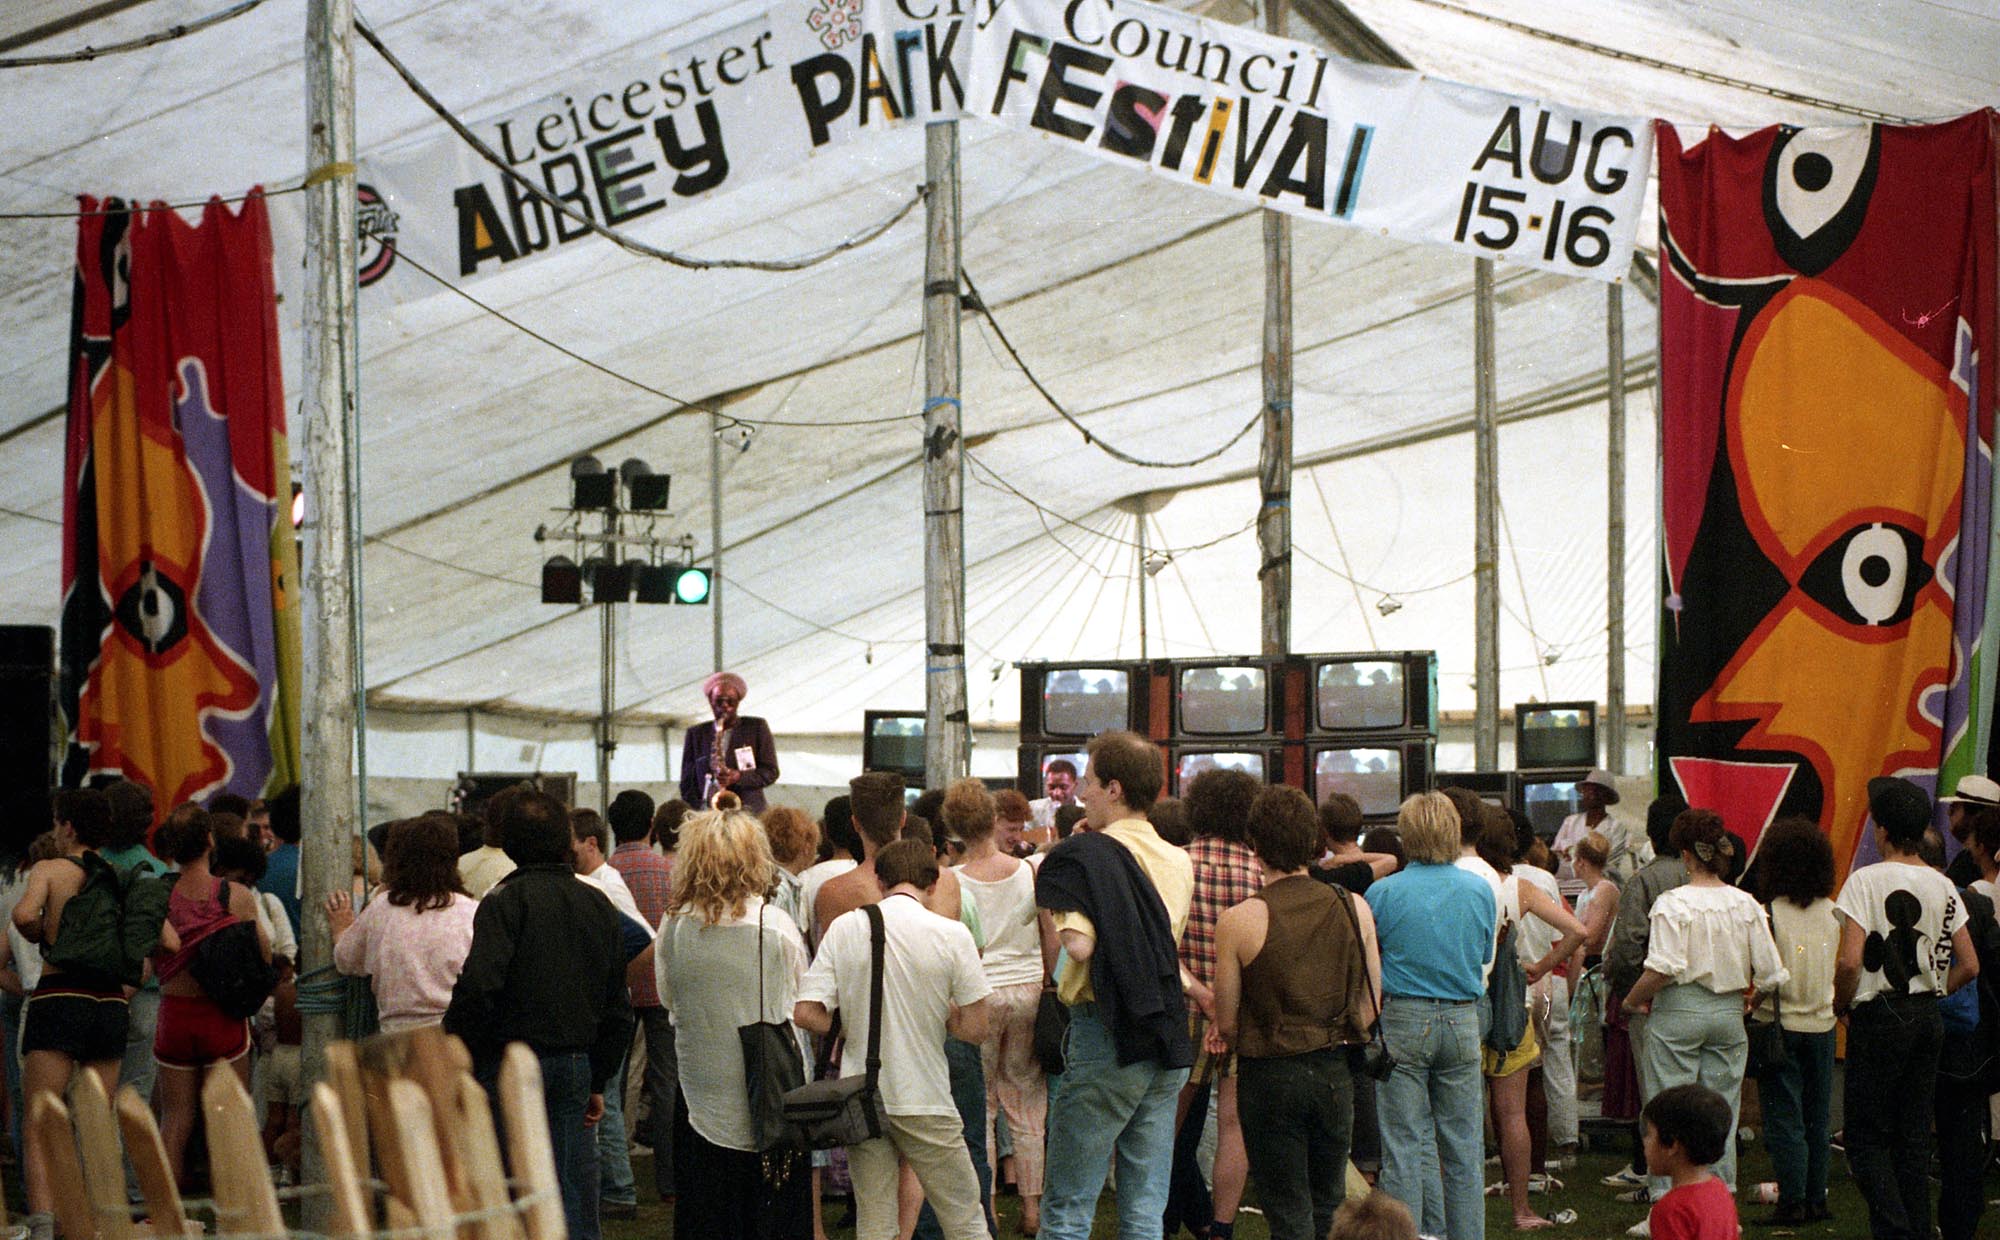 1987 08 25 Abbey Park Festival